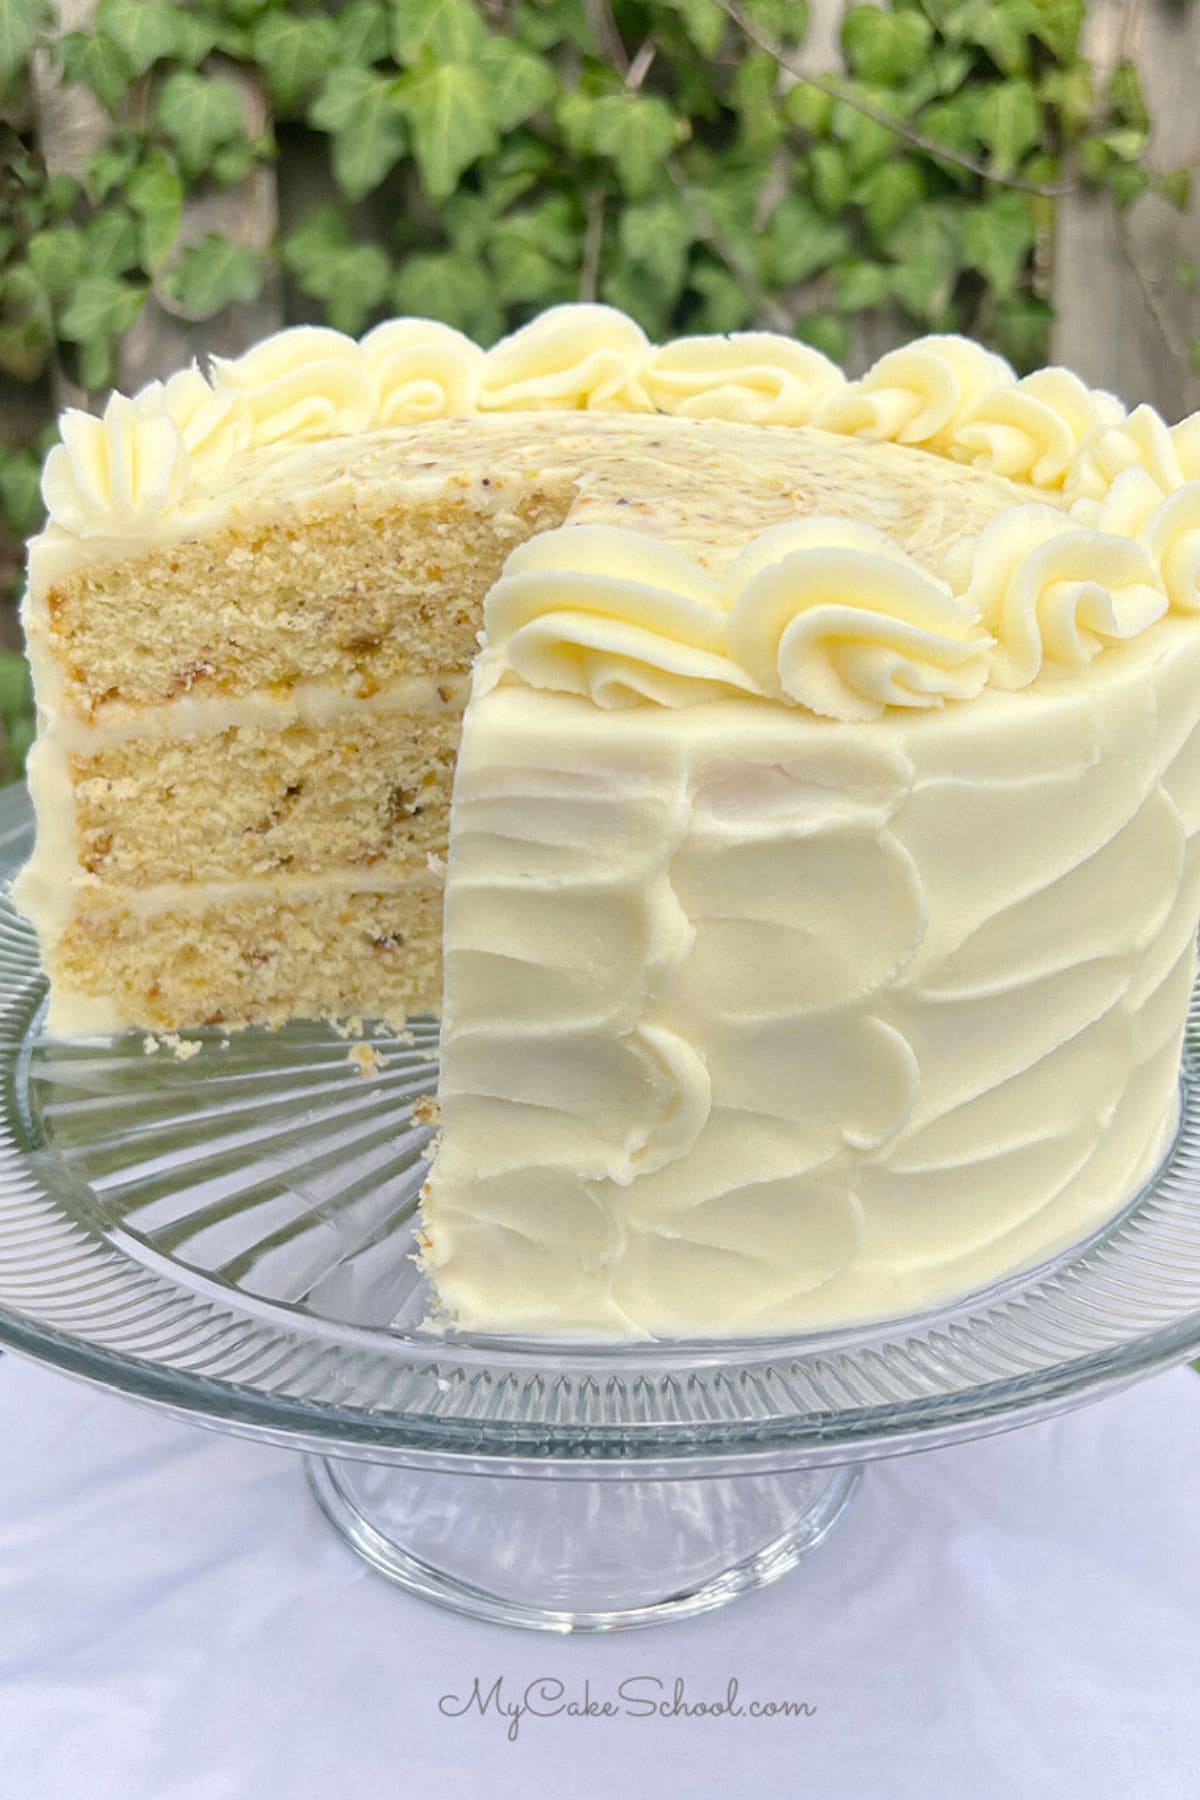 Pistachio cake on a cake pedestal, sliced.